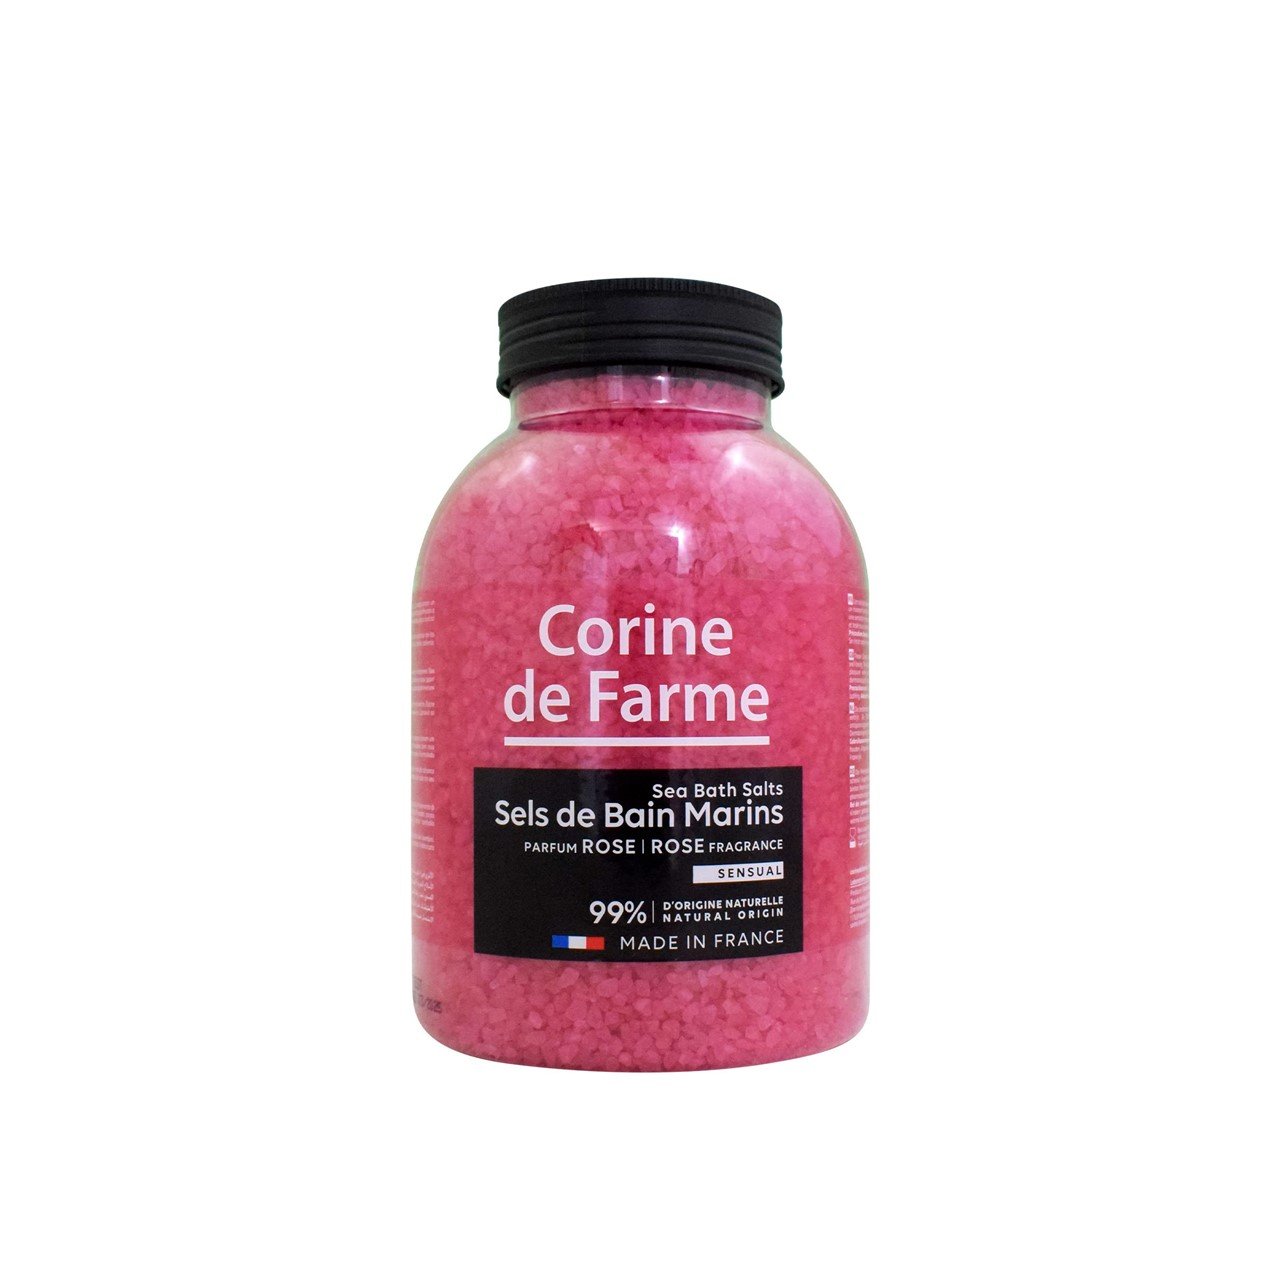 Corine de Farme Sea Bath Salts Rose Fragrance 1.3kg (45.85oz)